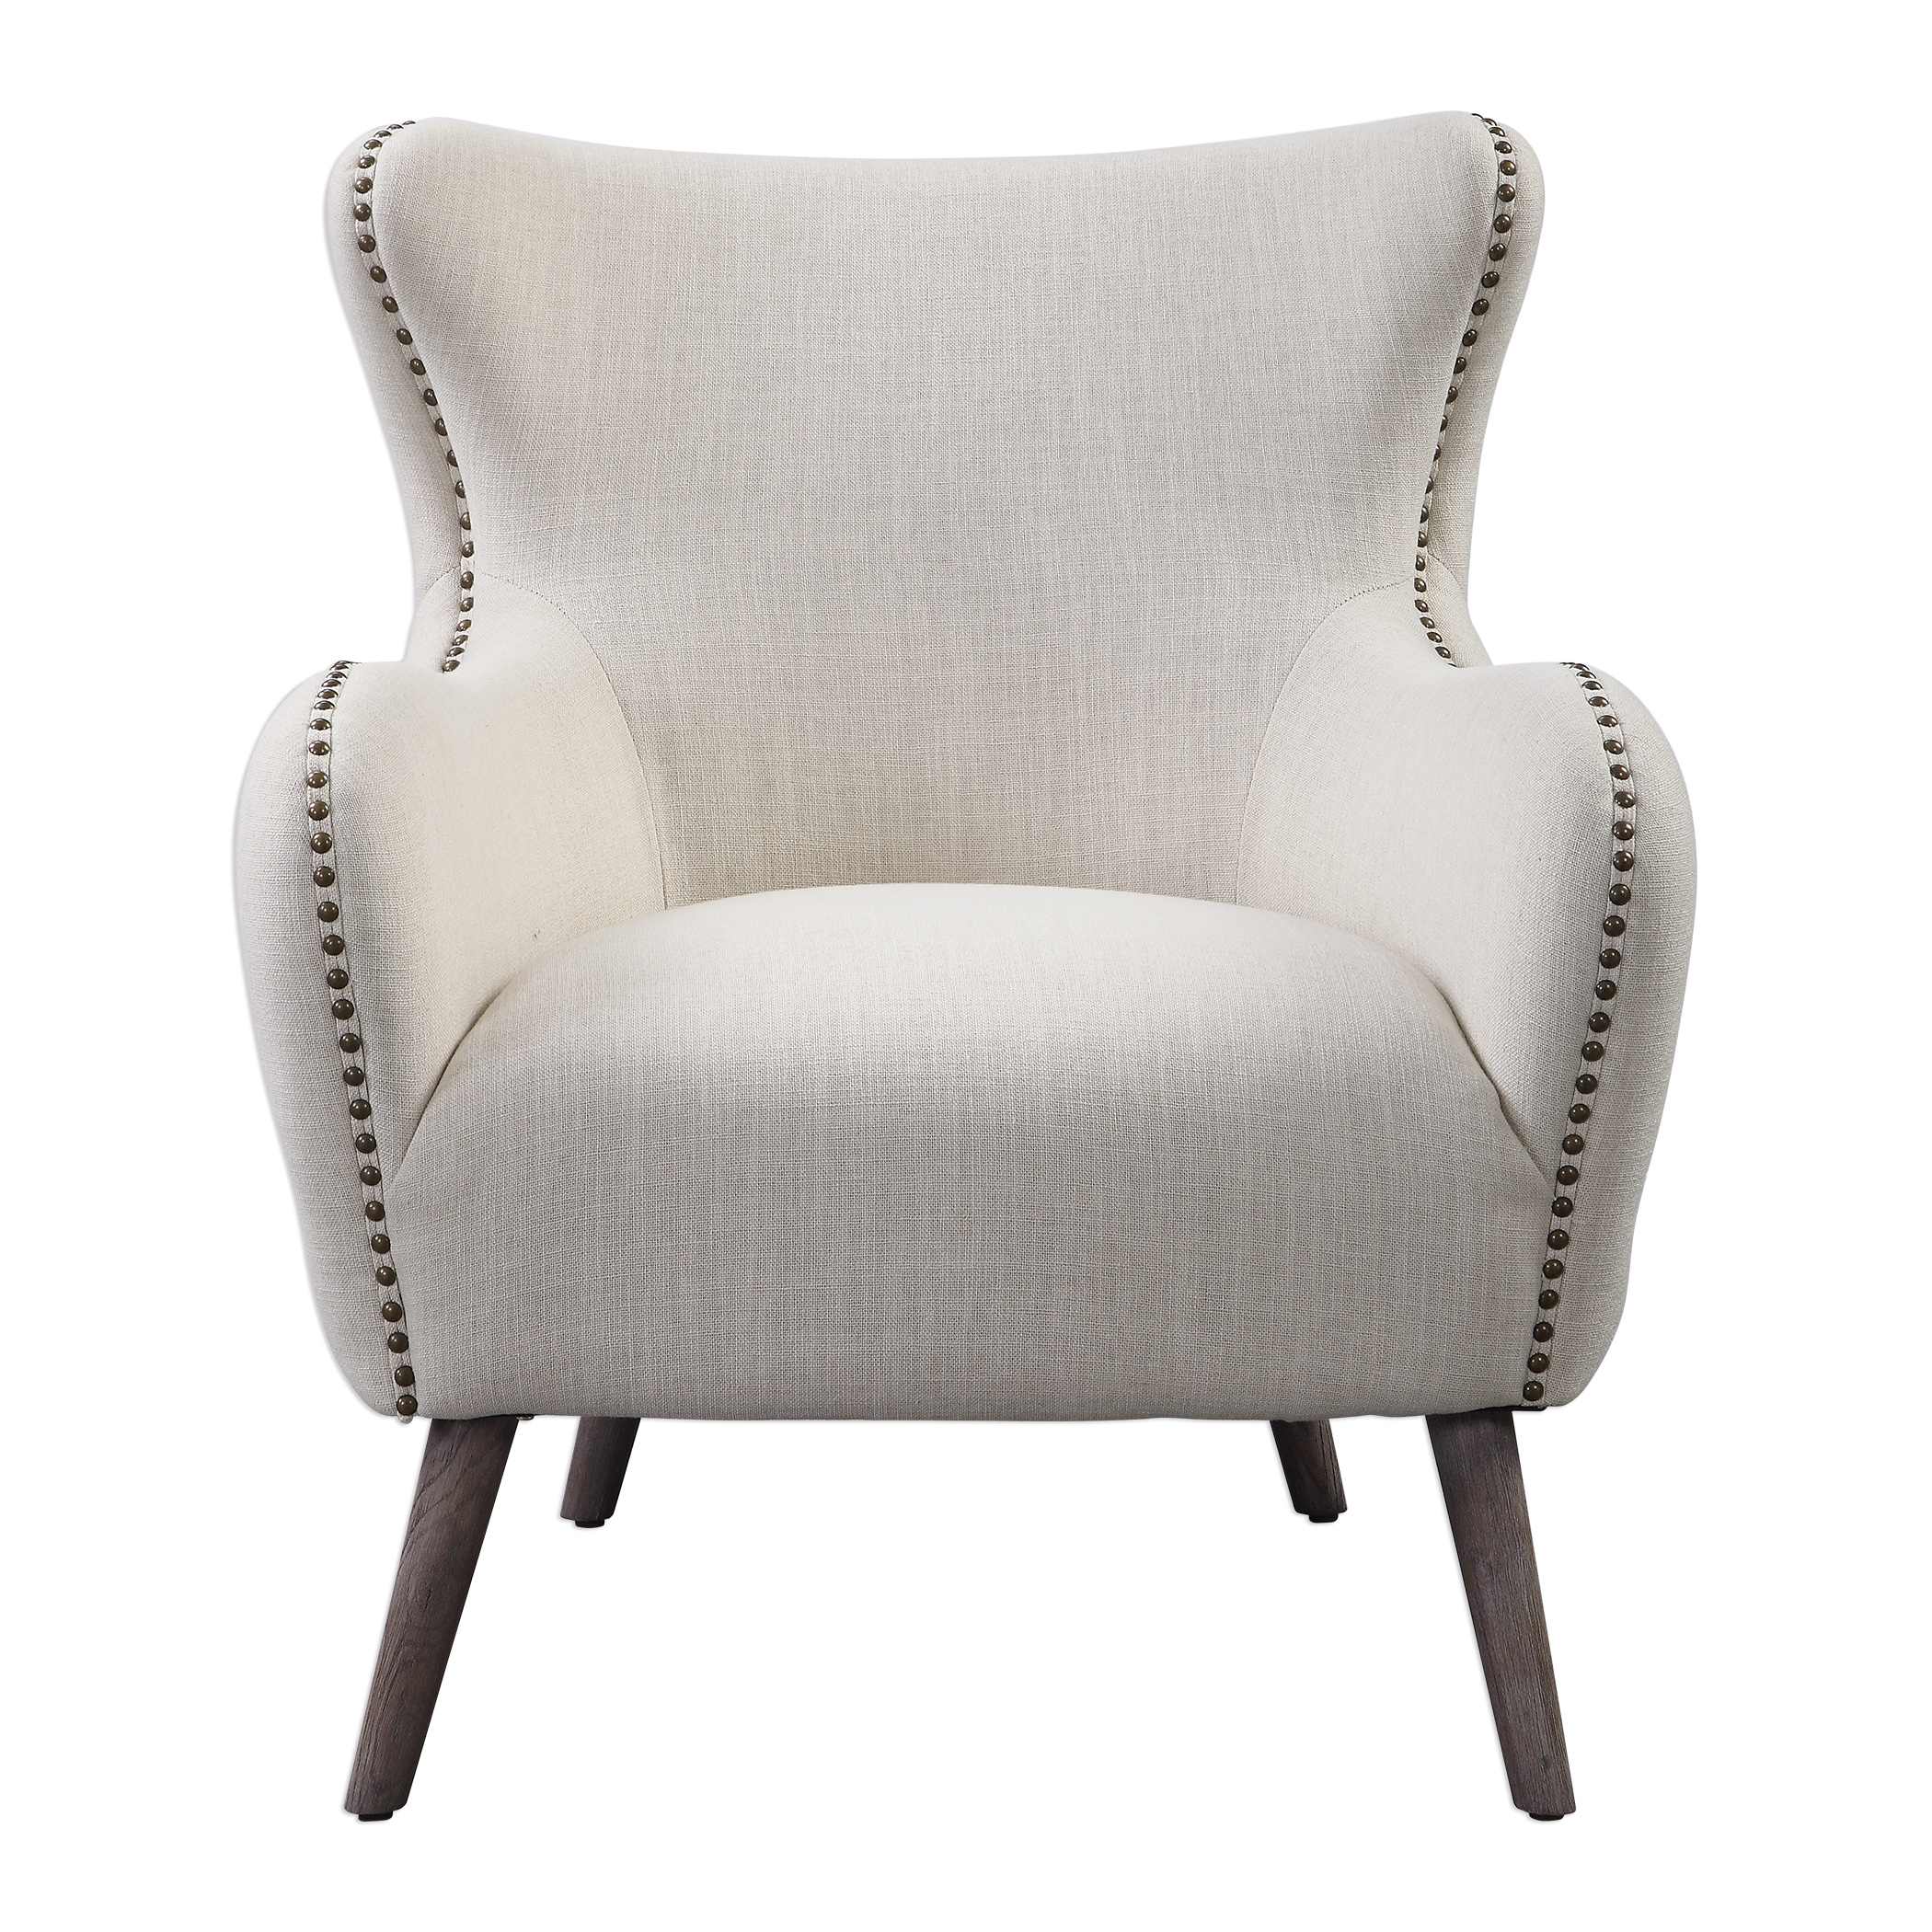 Donya Mid Century Modern Accent Chair in White wtih Subtle Argyle